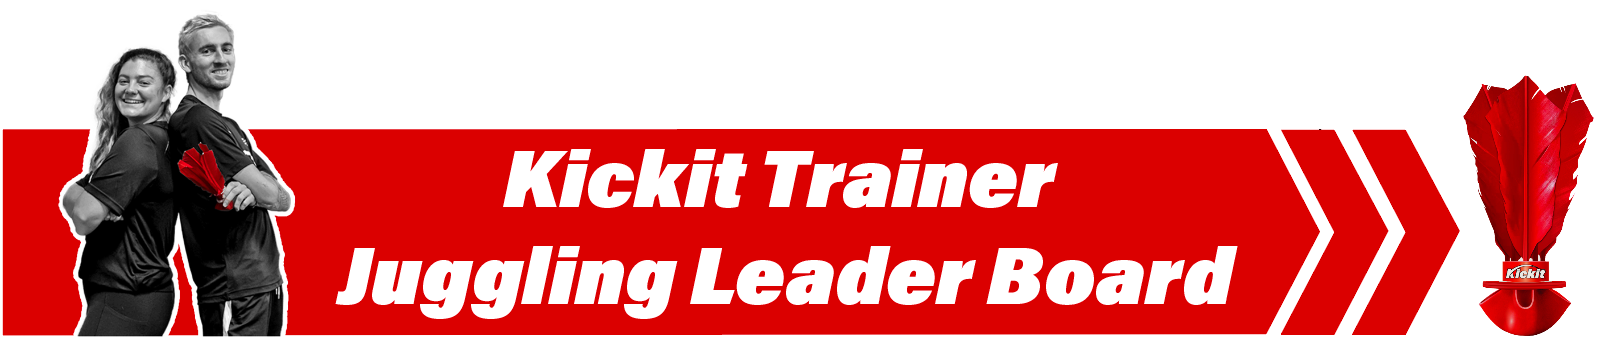 Kickit Trainer Juggling Leader Board